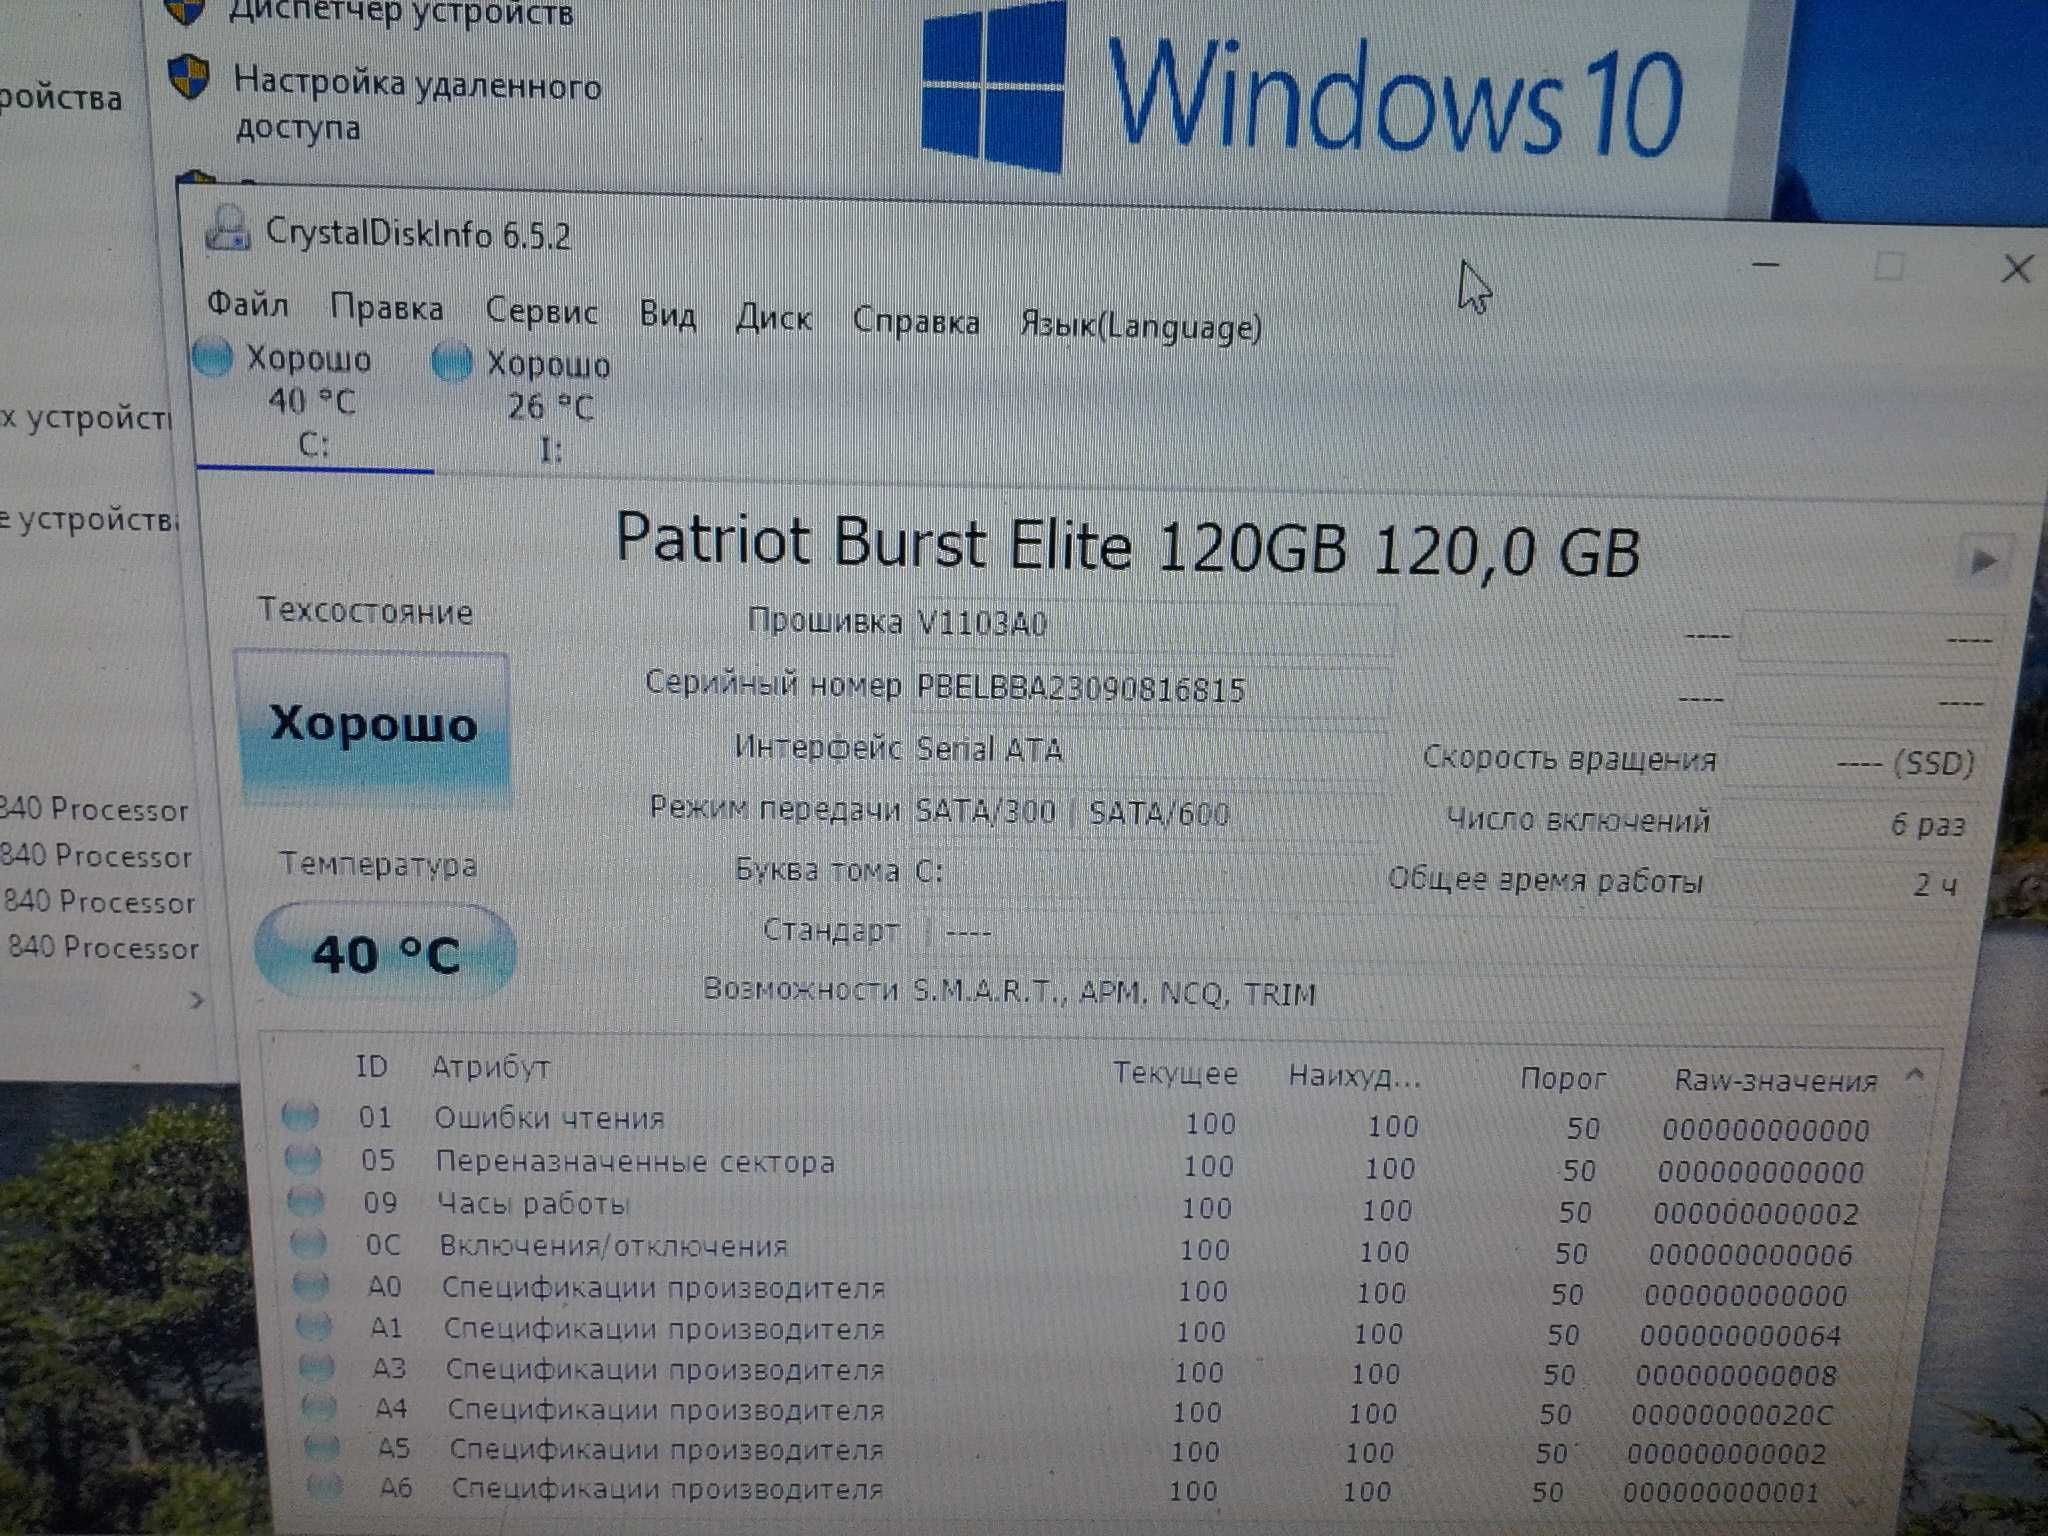 Компьютер 4 ядра, 6Гб,видео GTX 2Гб, SSD,монитор 19 дюймов.